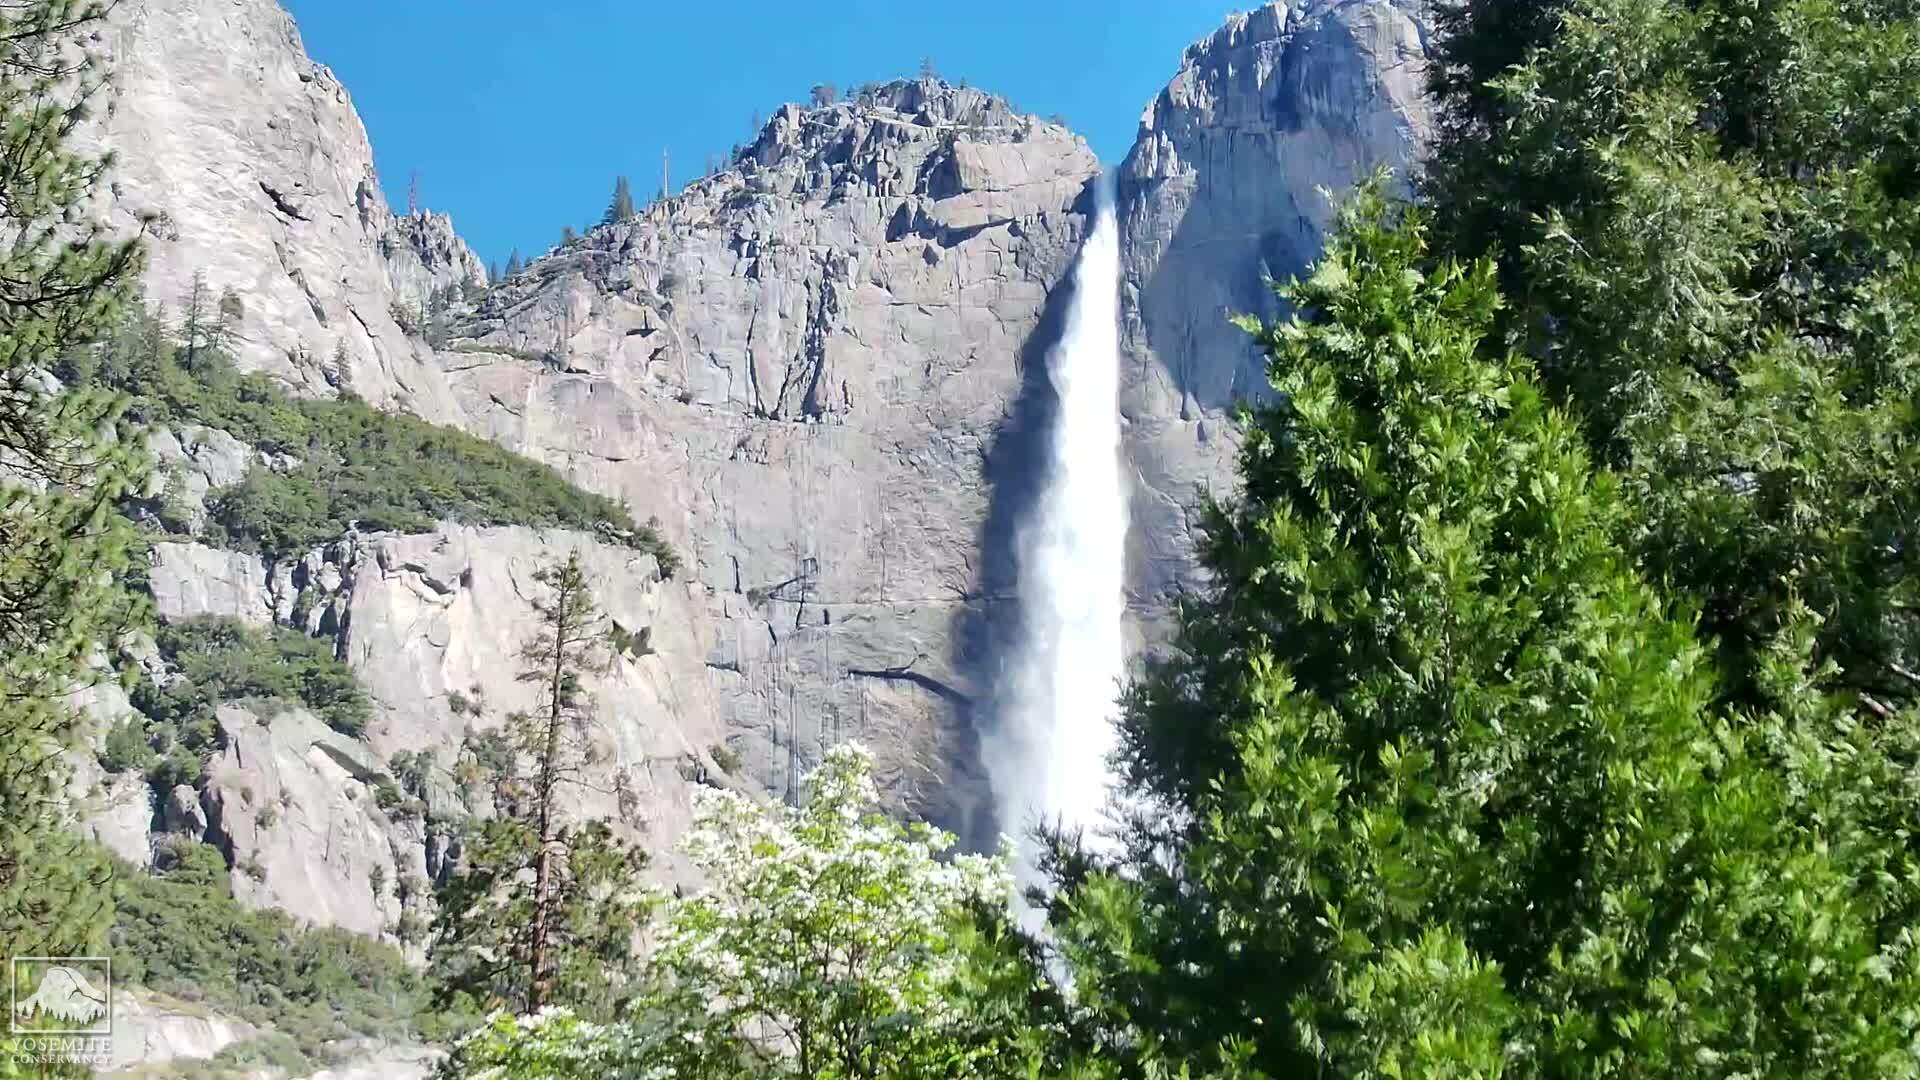 View of Upper Yosemite Fall